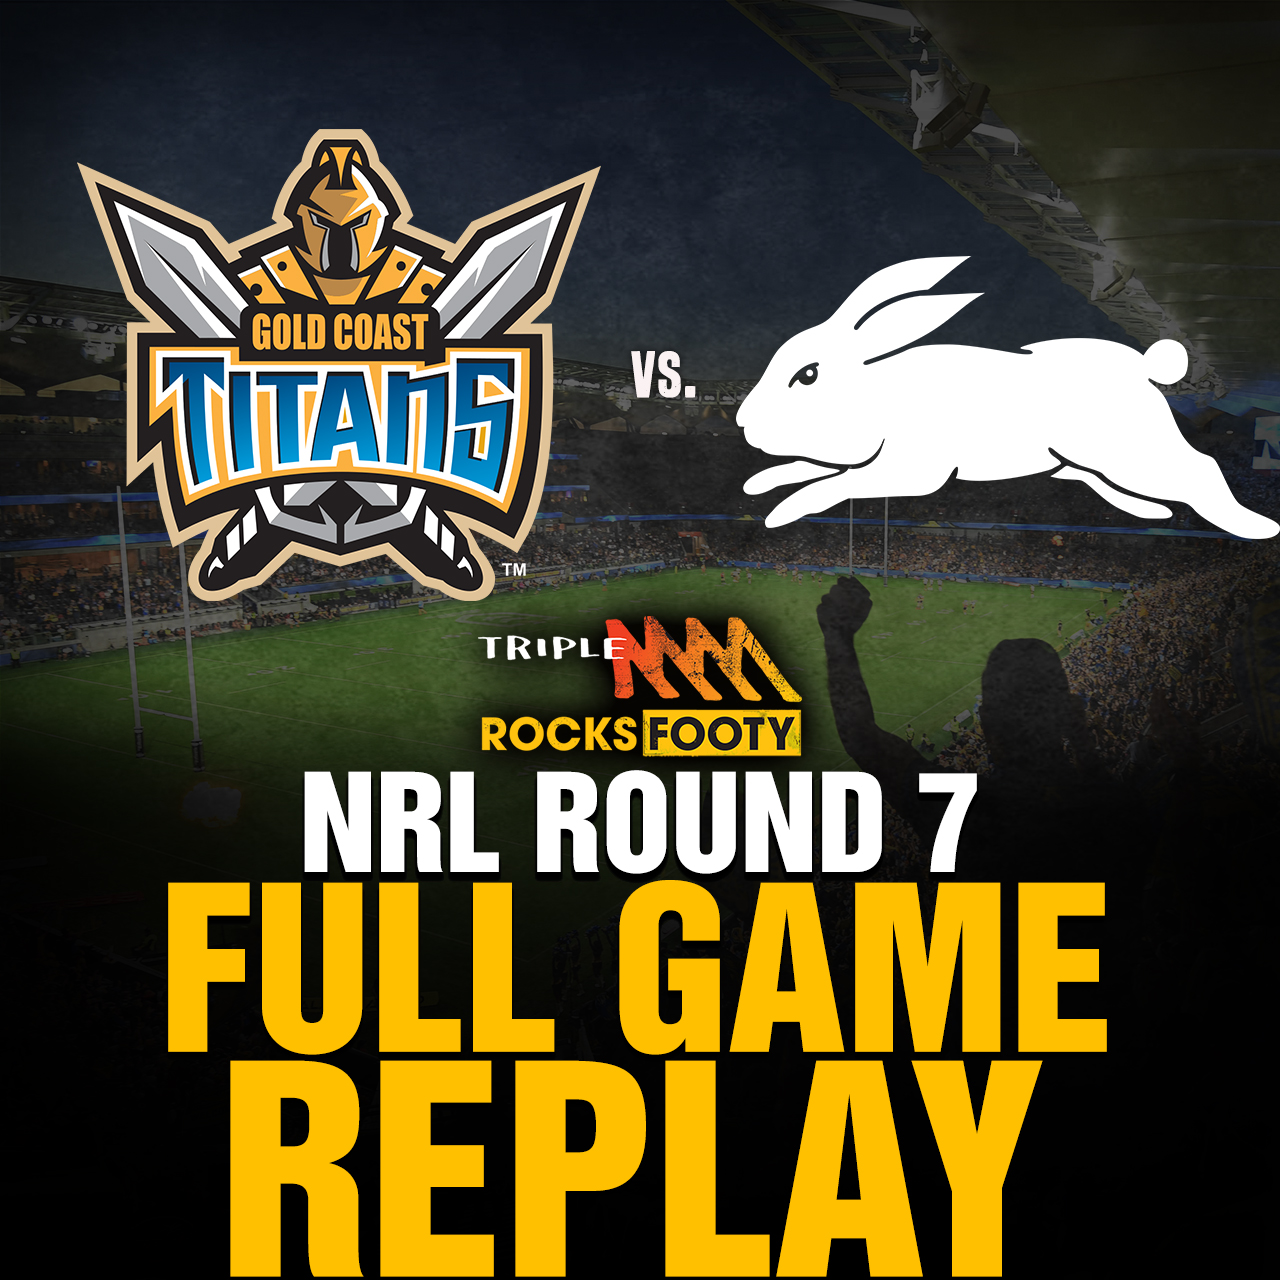 FULL GAME REPLAY | Gold Coast Titans vs. South Sydney Rabbitohs